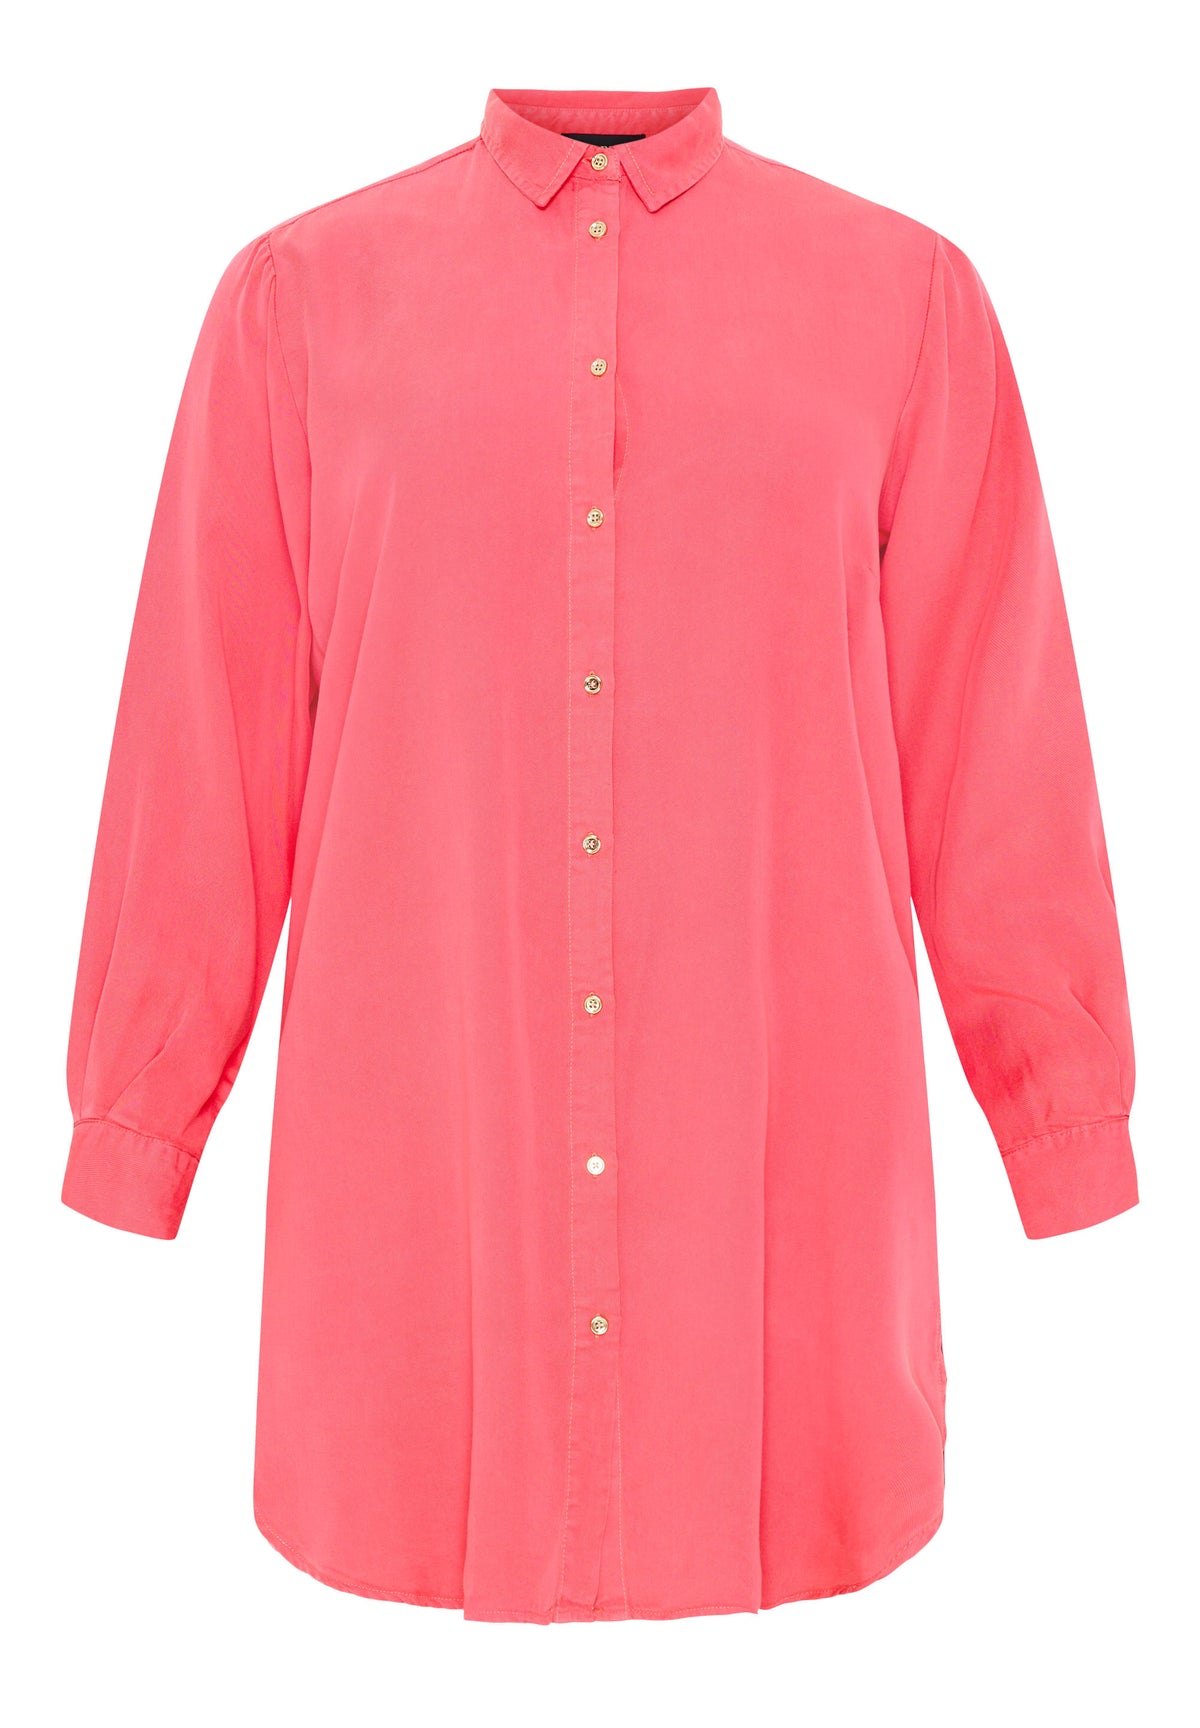 NO. 1 BY OX Lang skjorte Skjorter Rosa